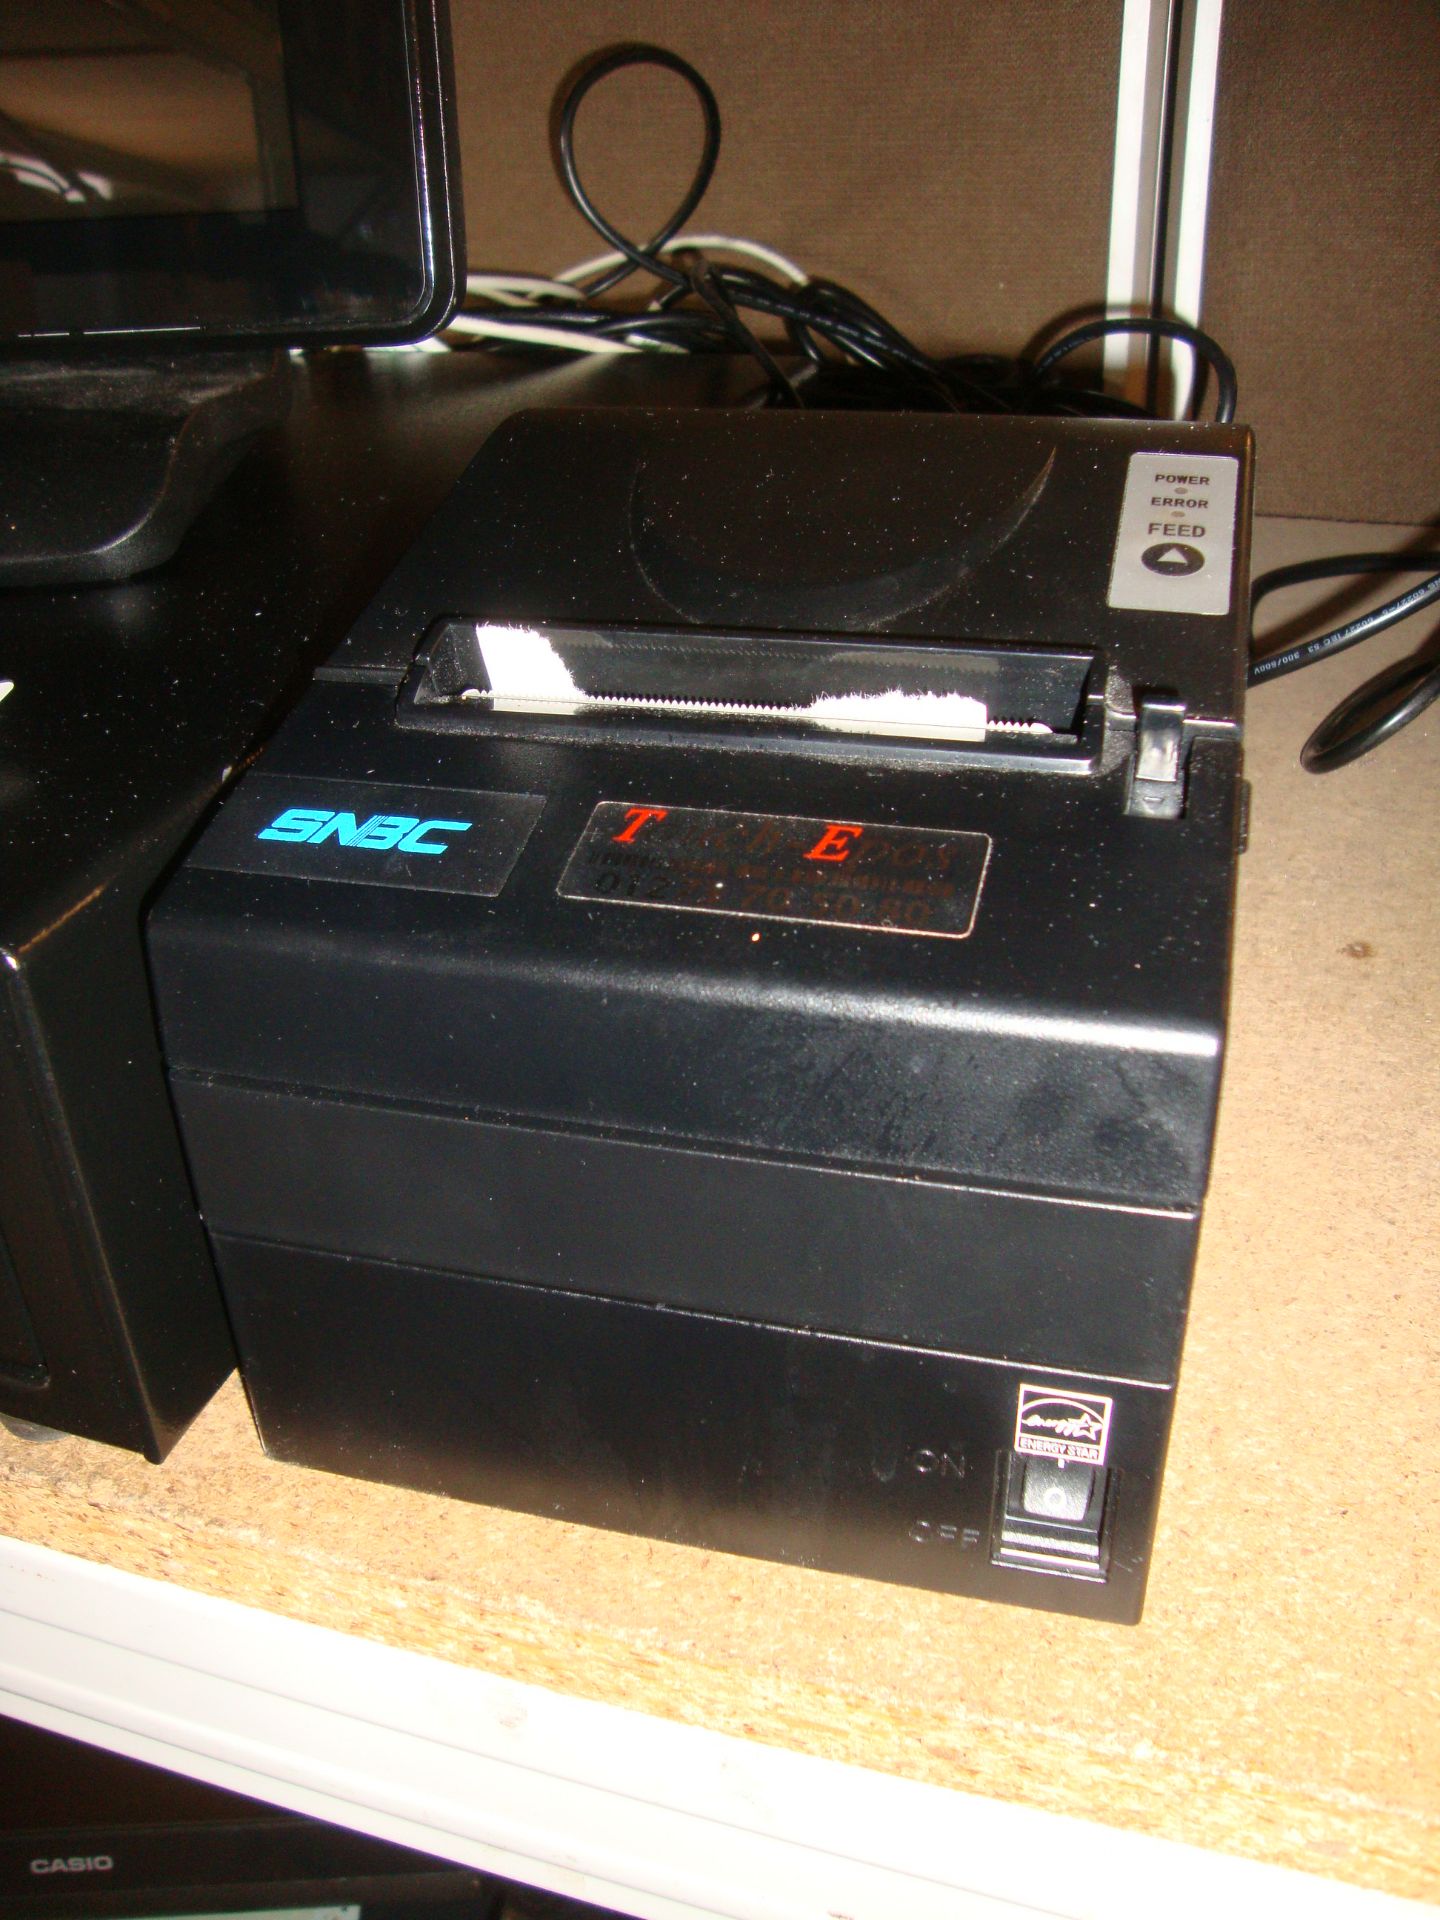 Poindus model Posinno 550 touchscreen EPOS system including cash drawer plus SNBC receipt printer - Image 8 of 18